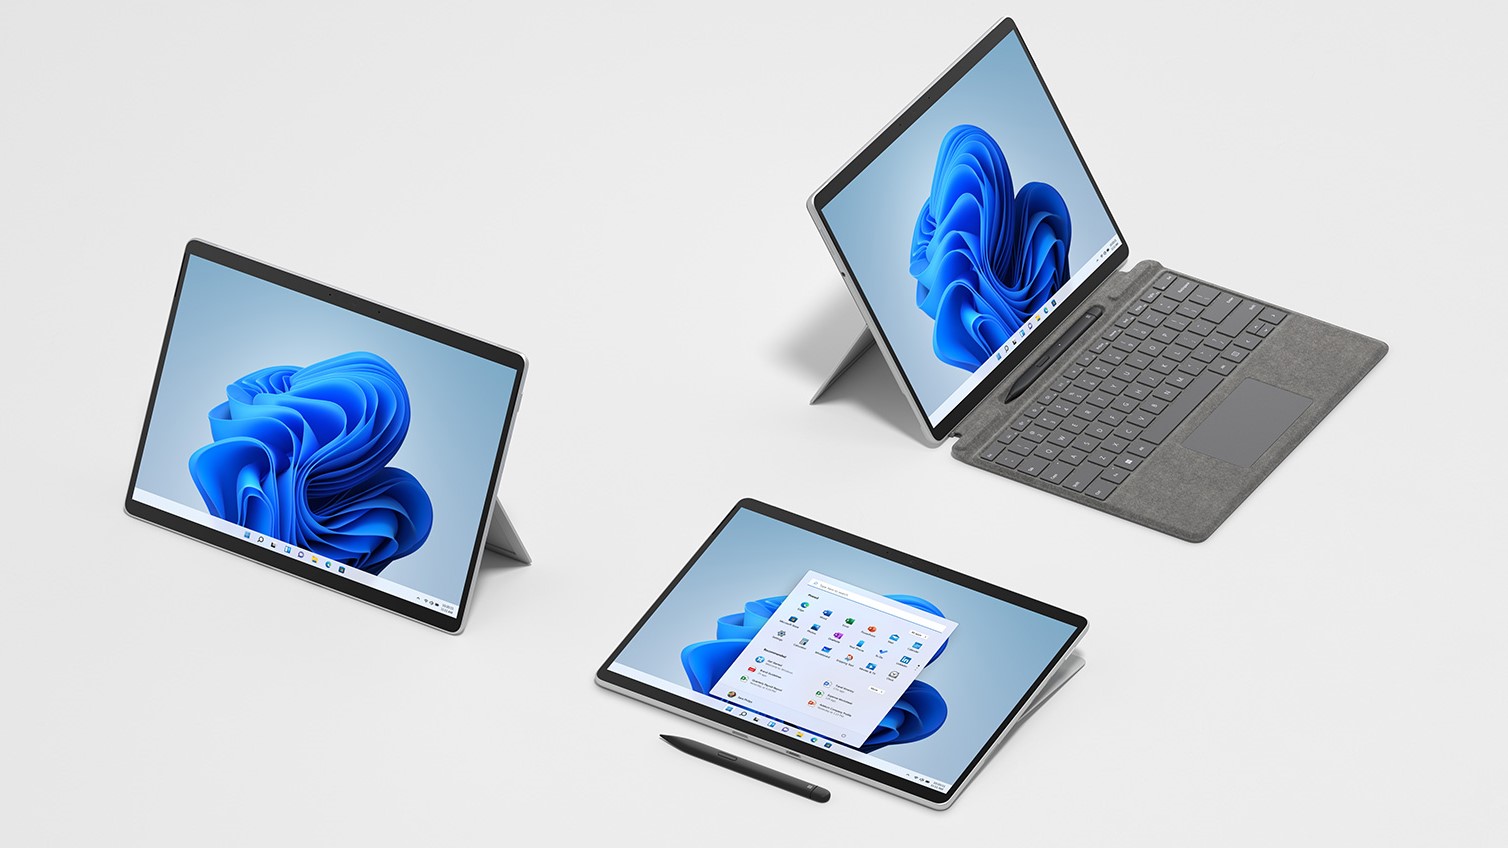 Microsoft Surface Pro 8 (2021) Core i5-1135G7 RAM 8GB SSD 128GB 13 inch Touch Windows 11 - Platinum